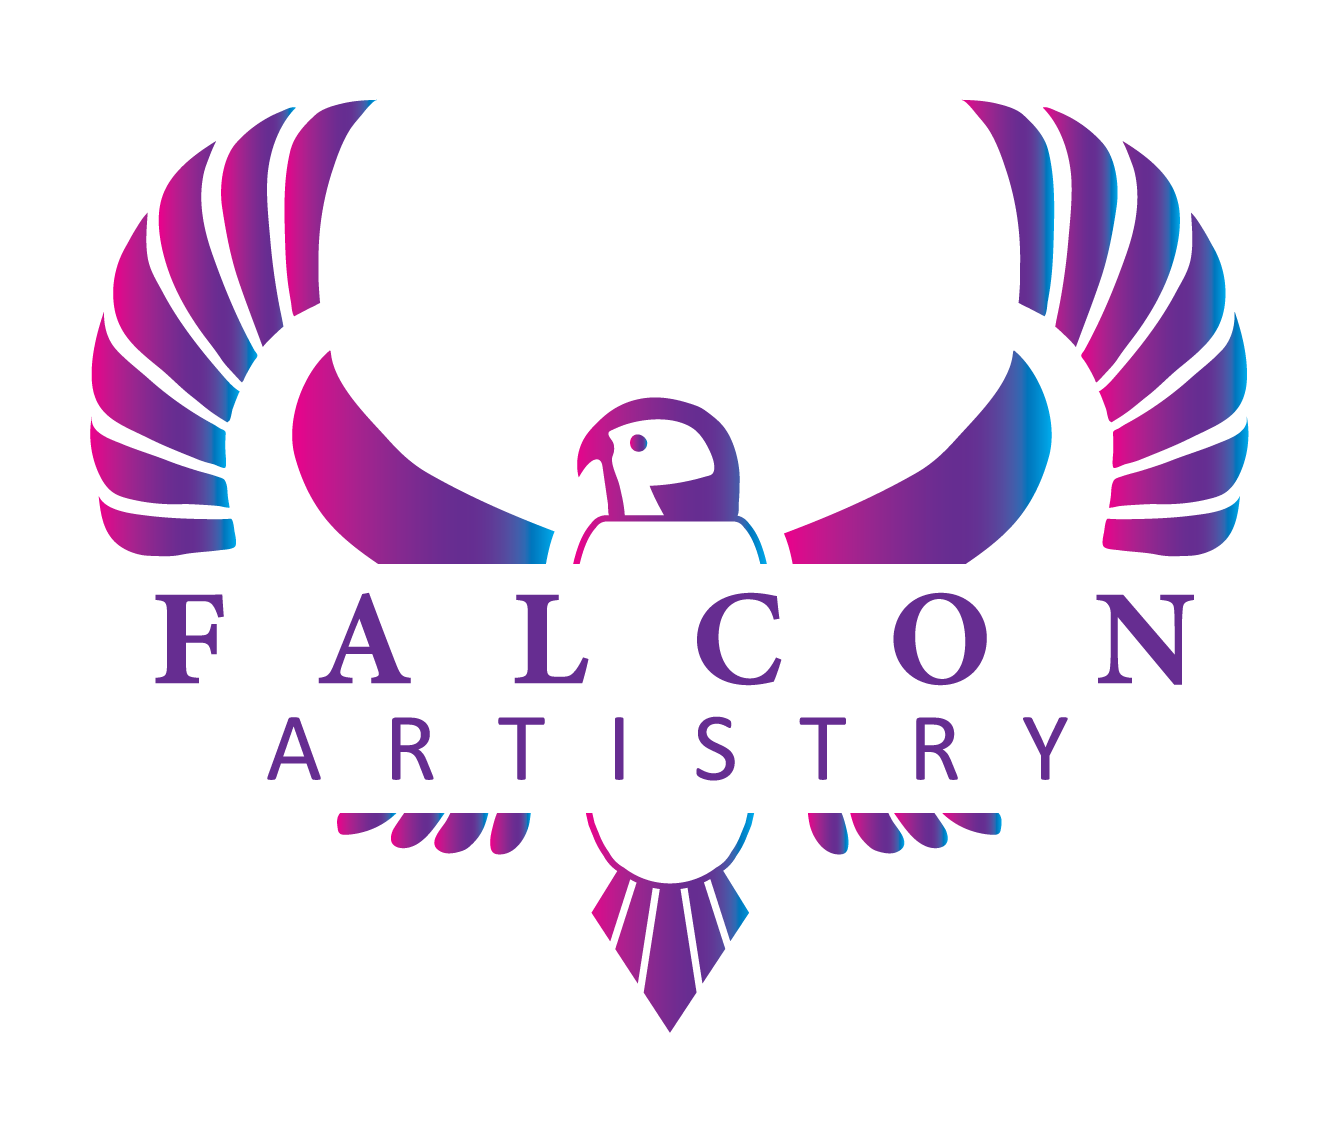 Falcon Artistry Tattoo: Cosmetic & Restorative Academy logo